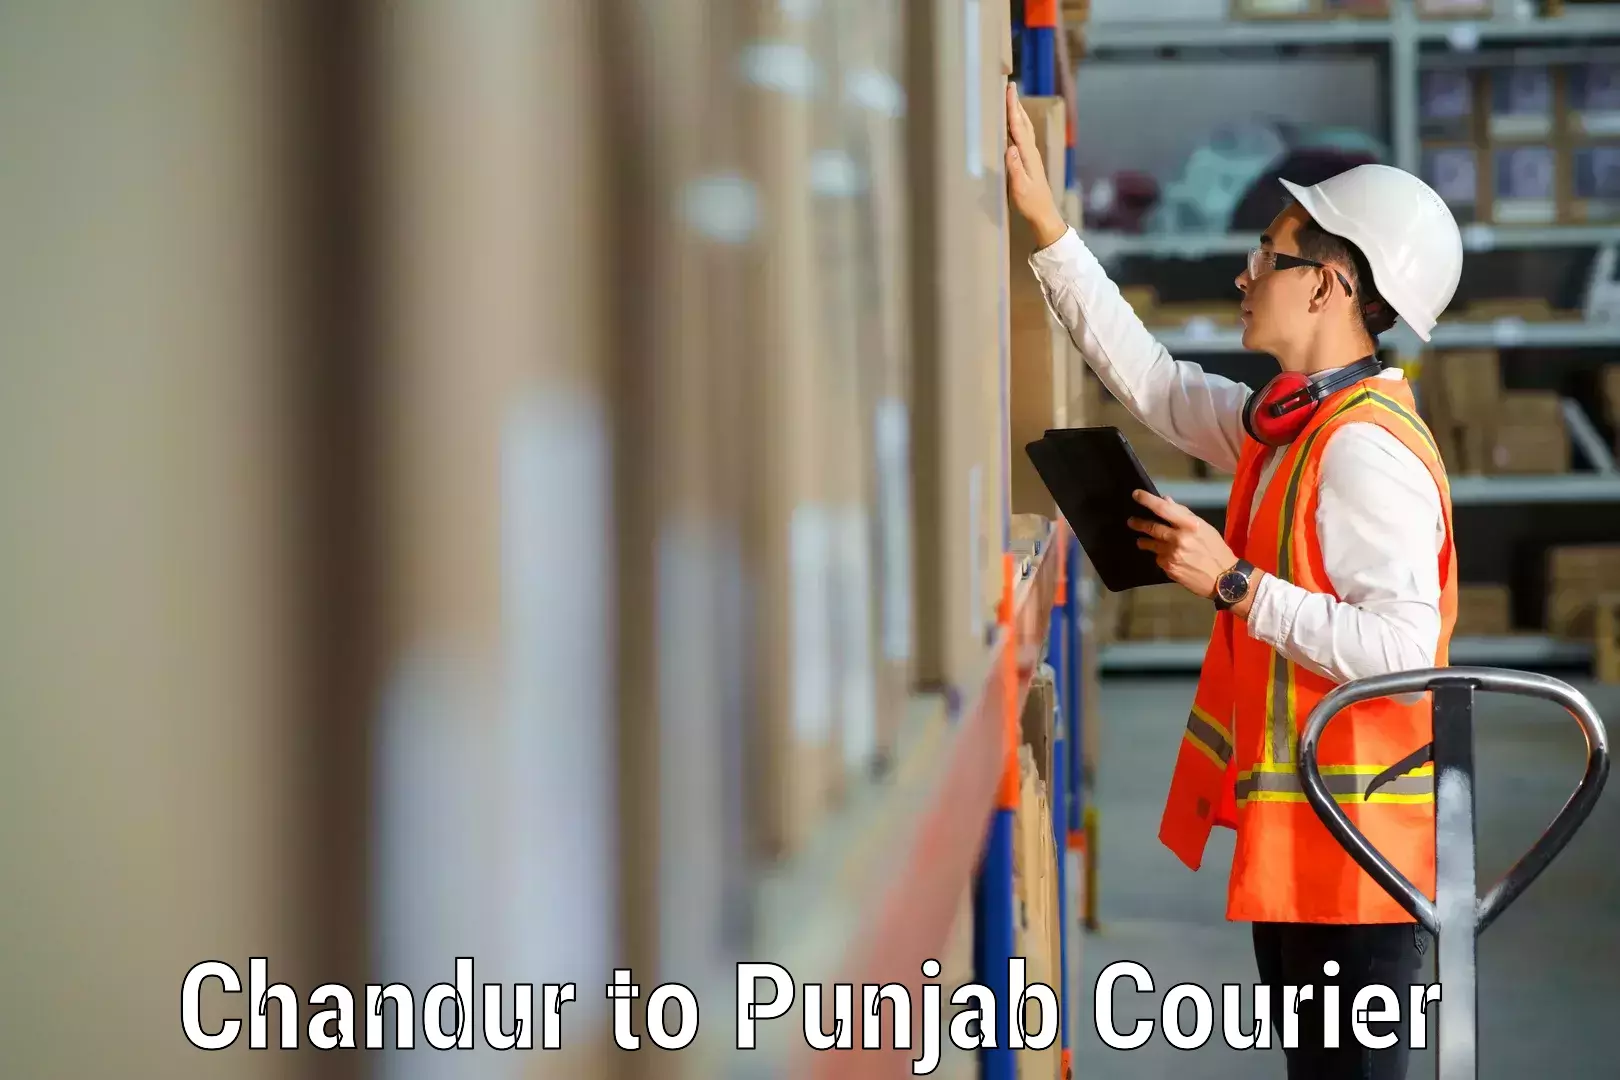 Professional movers Chandur to Punjab